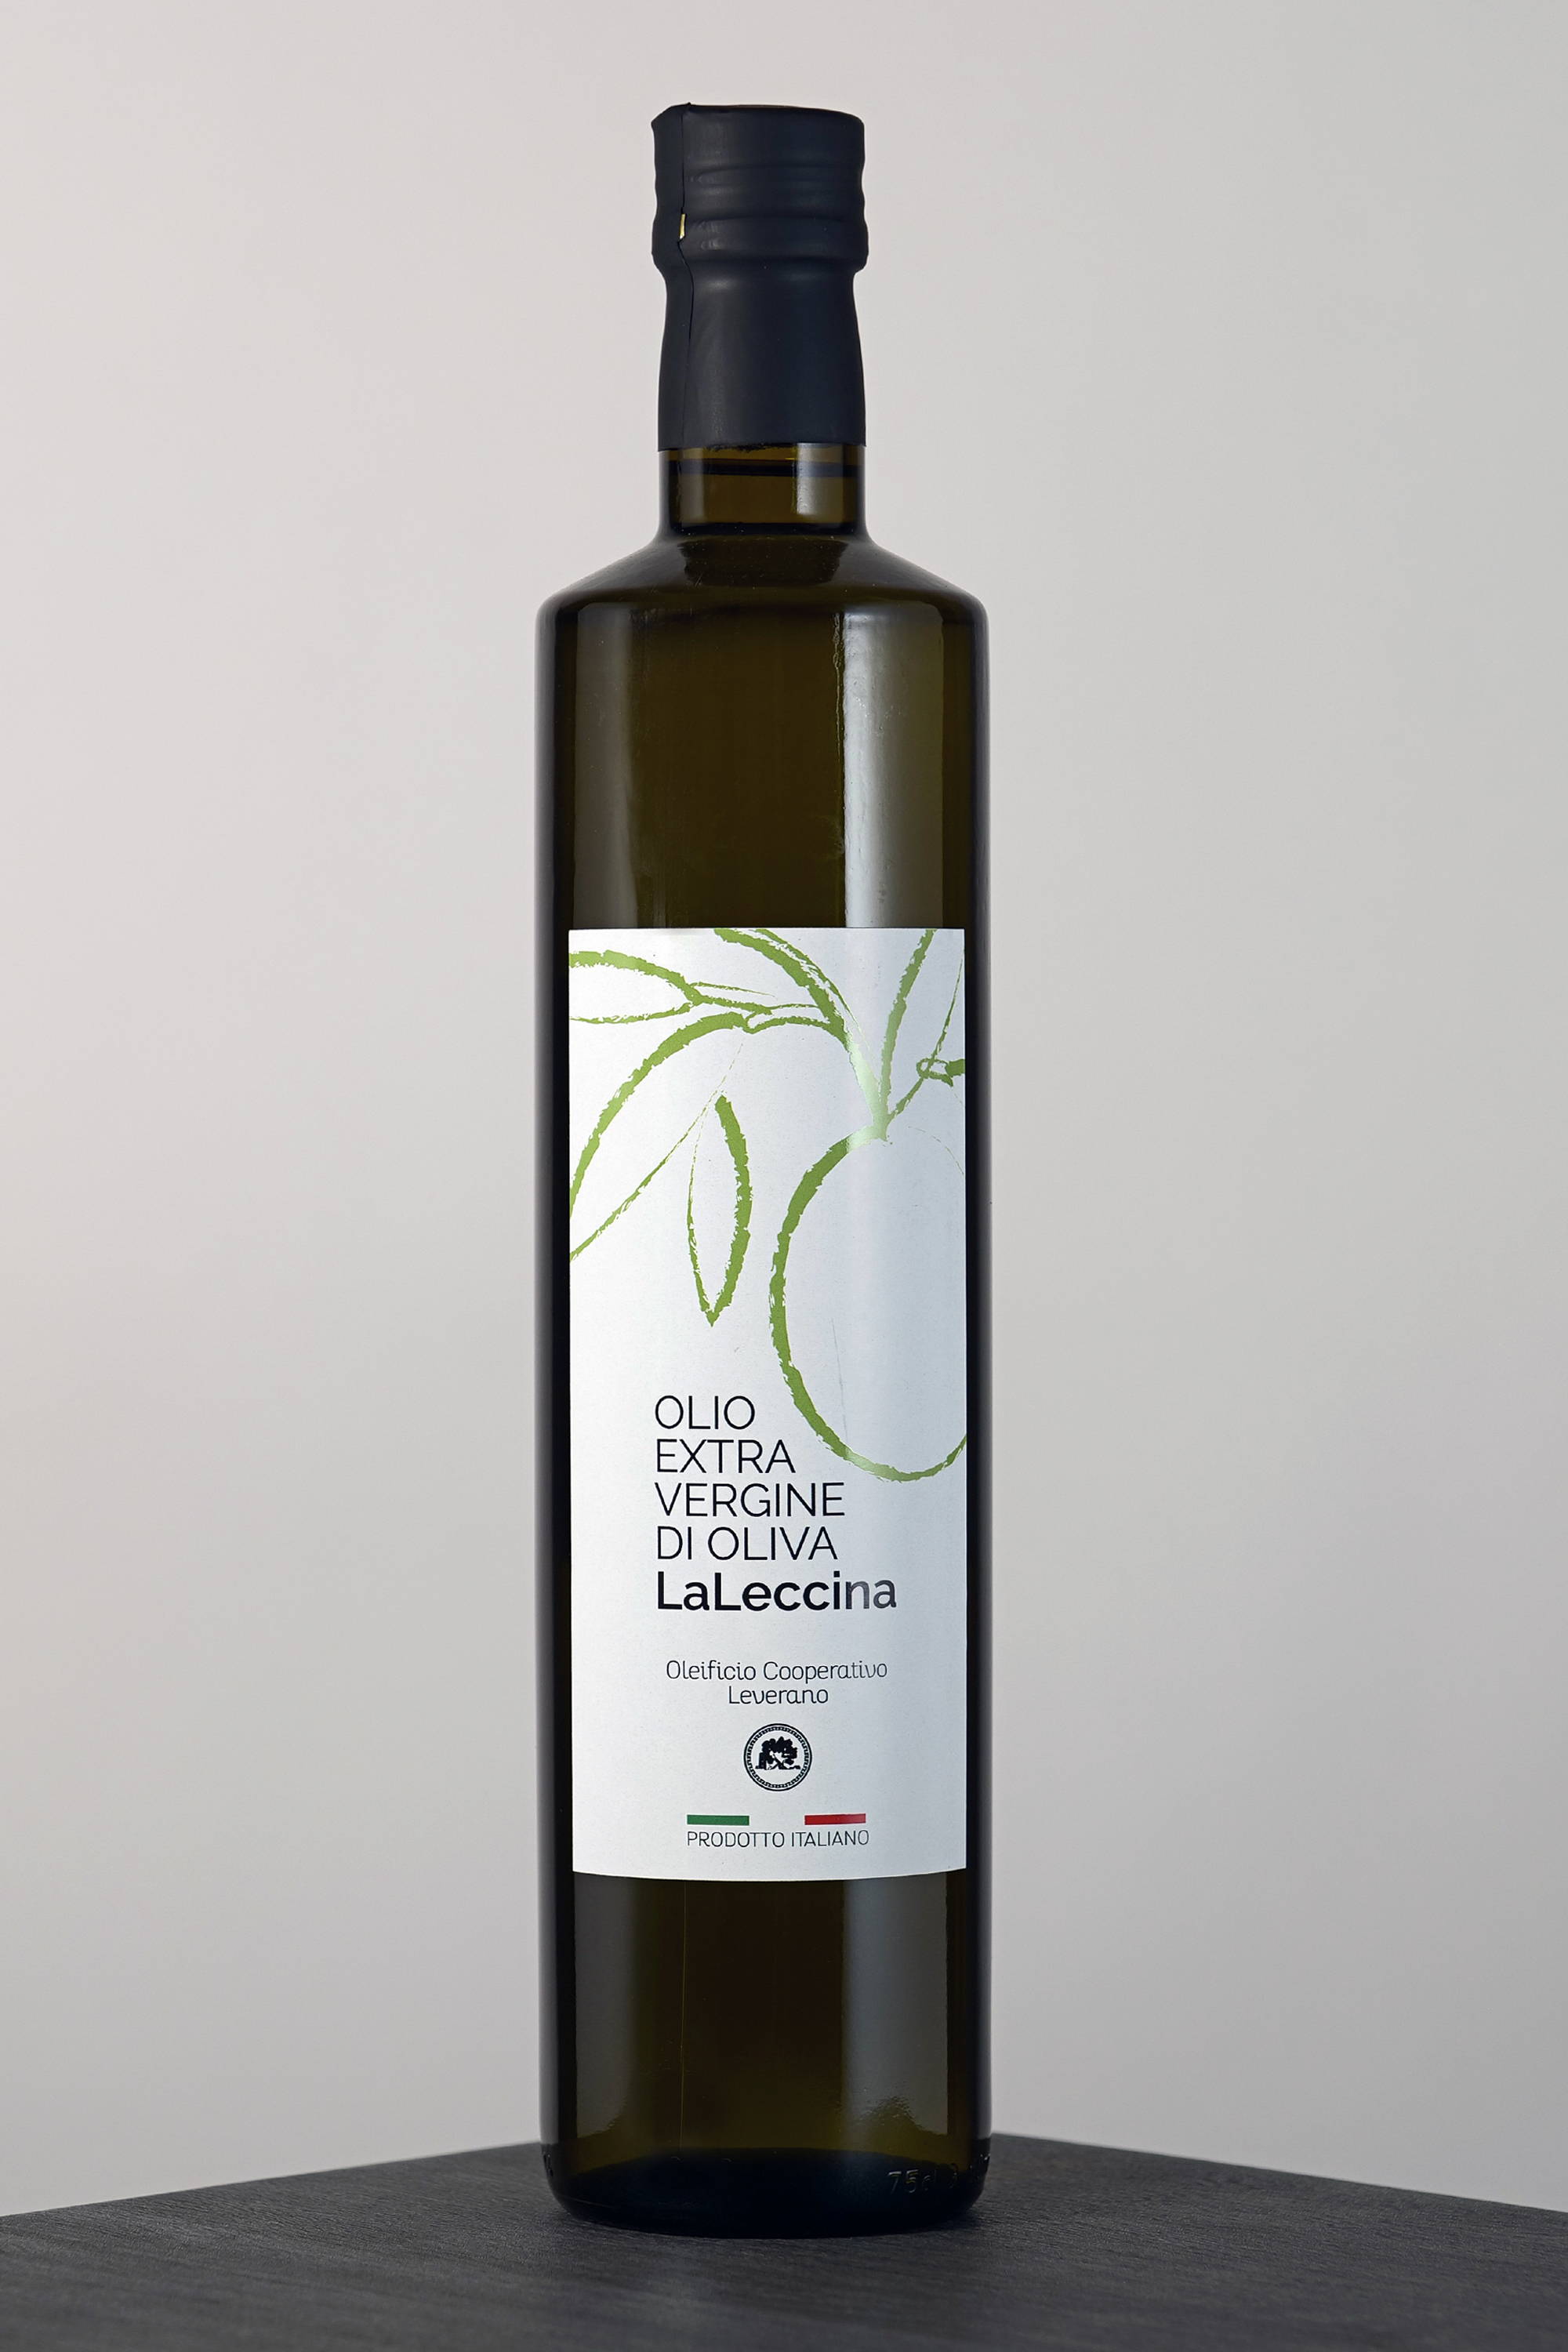 Extravergine d'oliva "LaLeccina" - lt. 3,00